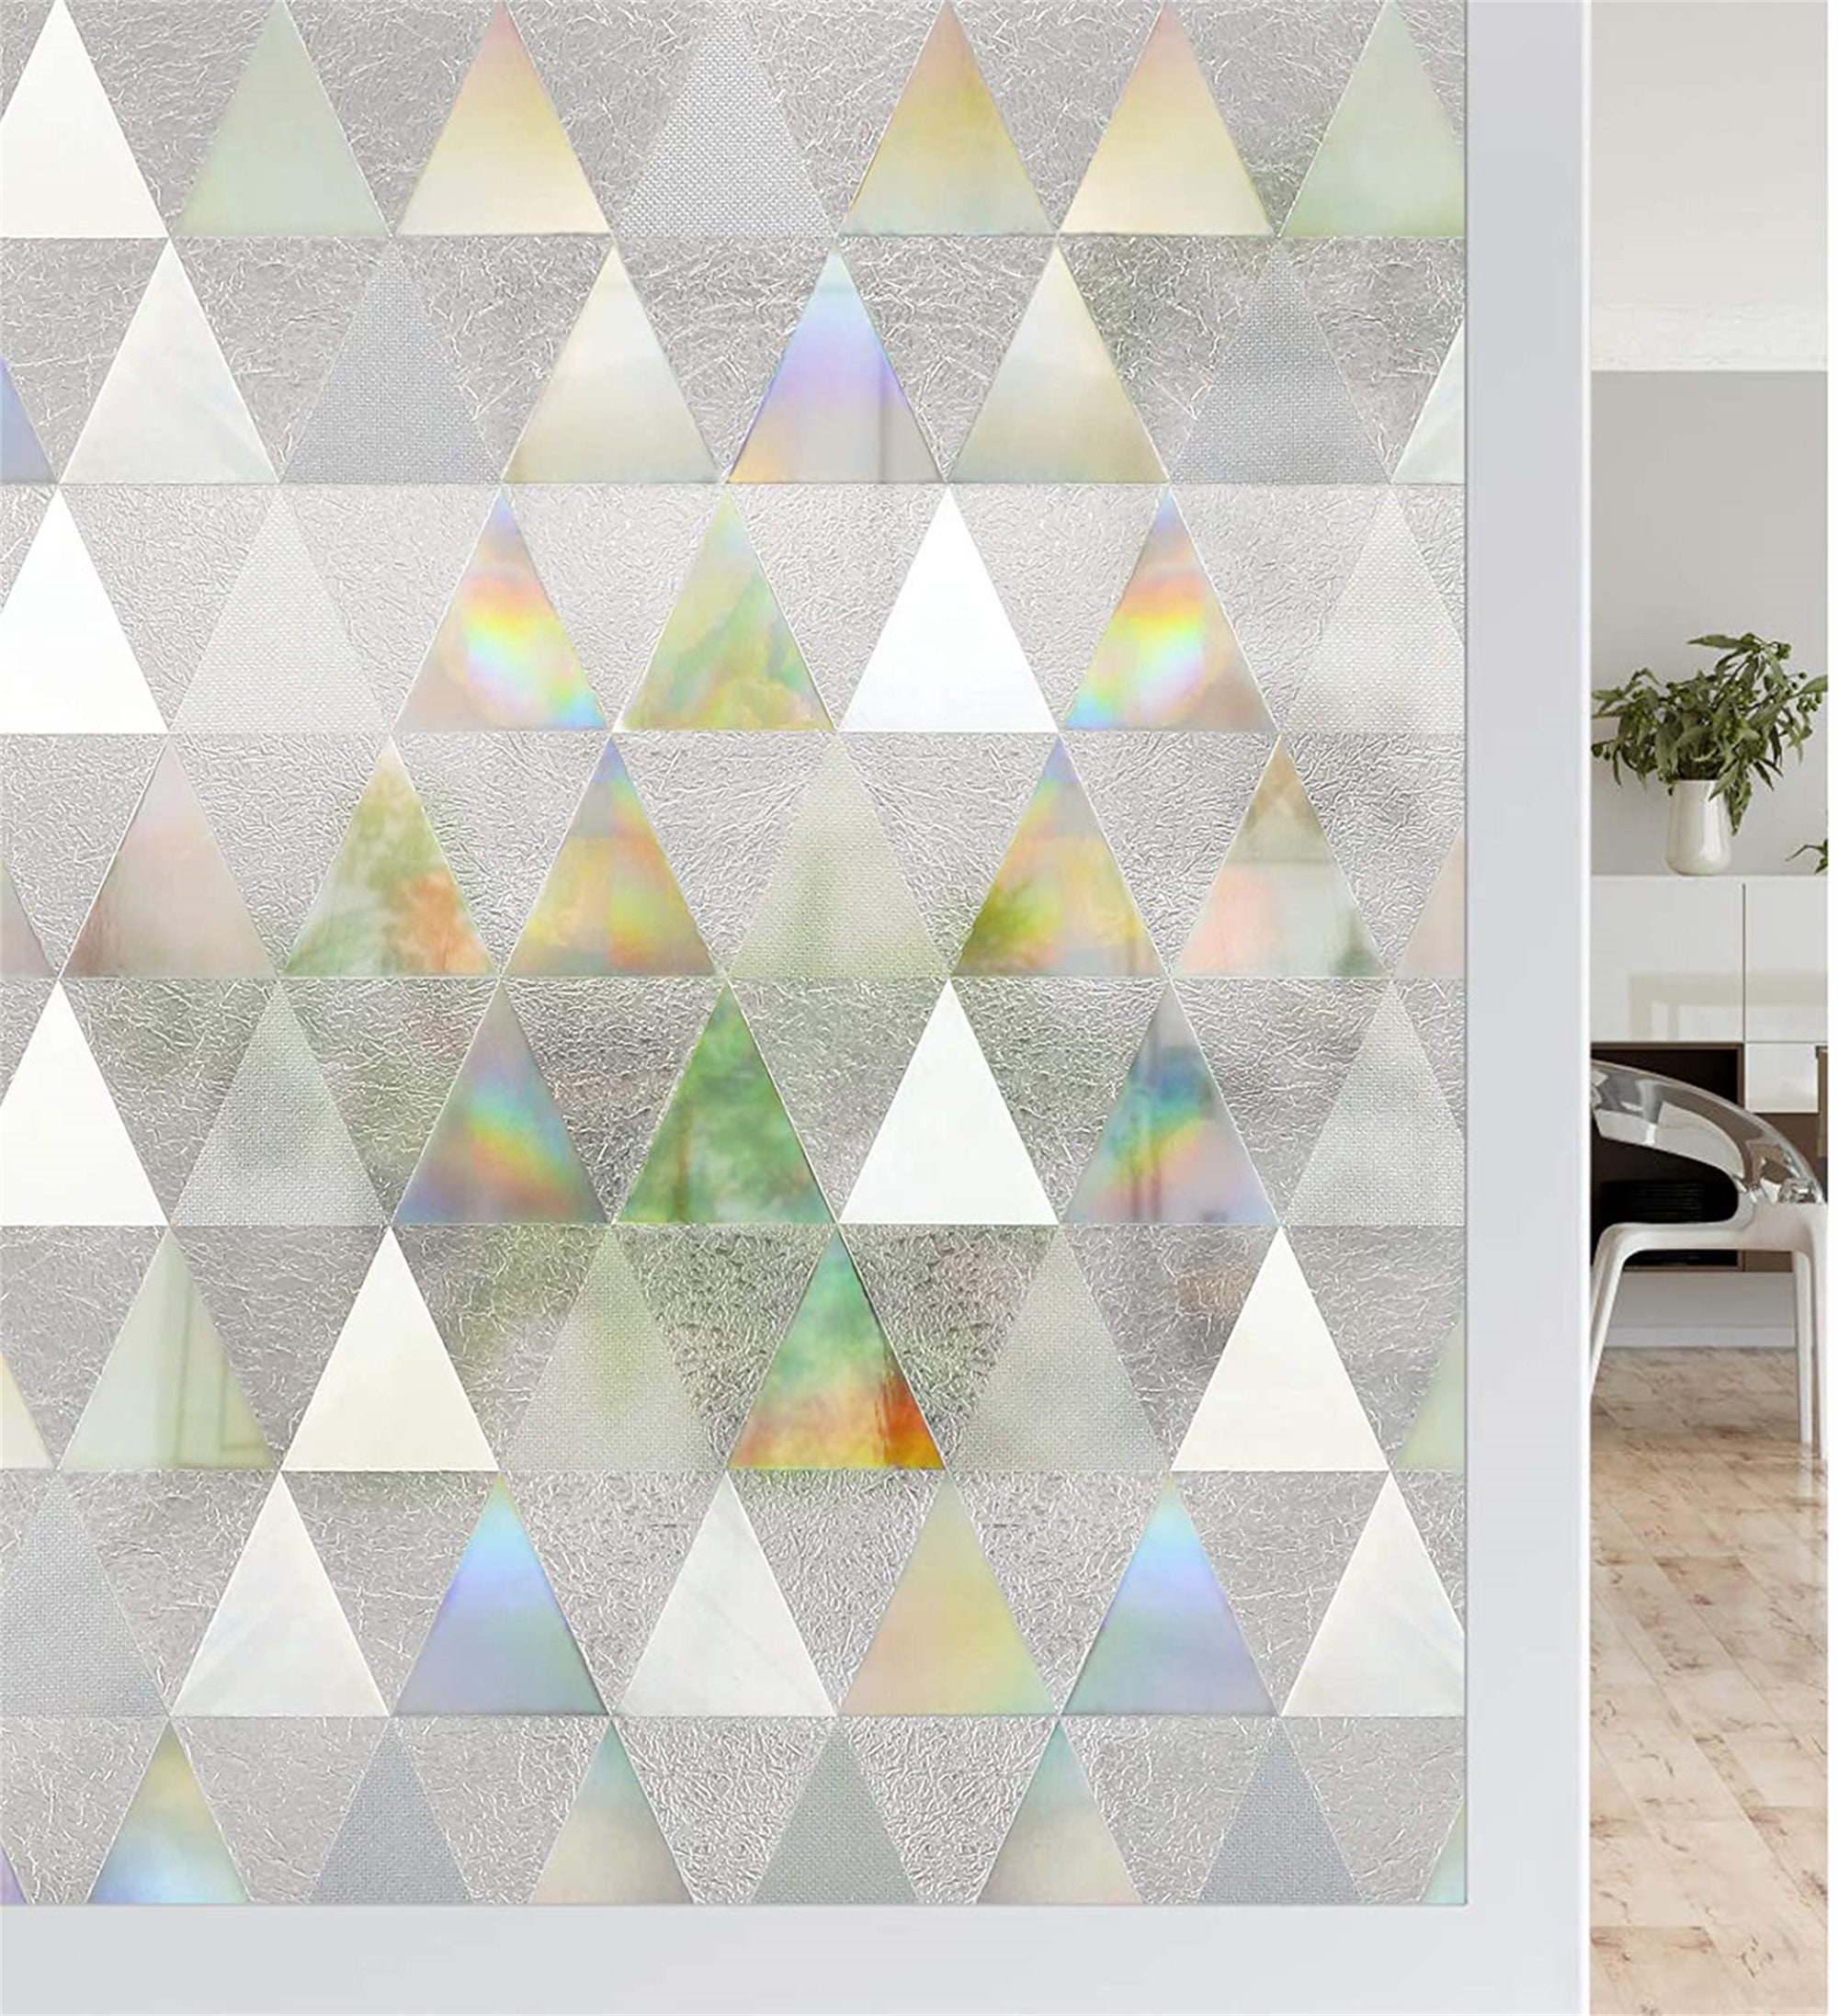 45cmx200cm Chameleon Window Film Rainbow Iridescent Holographic Home window  Vinyl Self-Adhesive Solar Film Glass Decoration, Wish